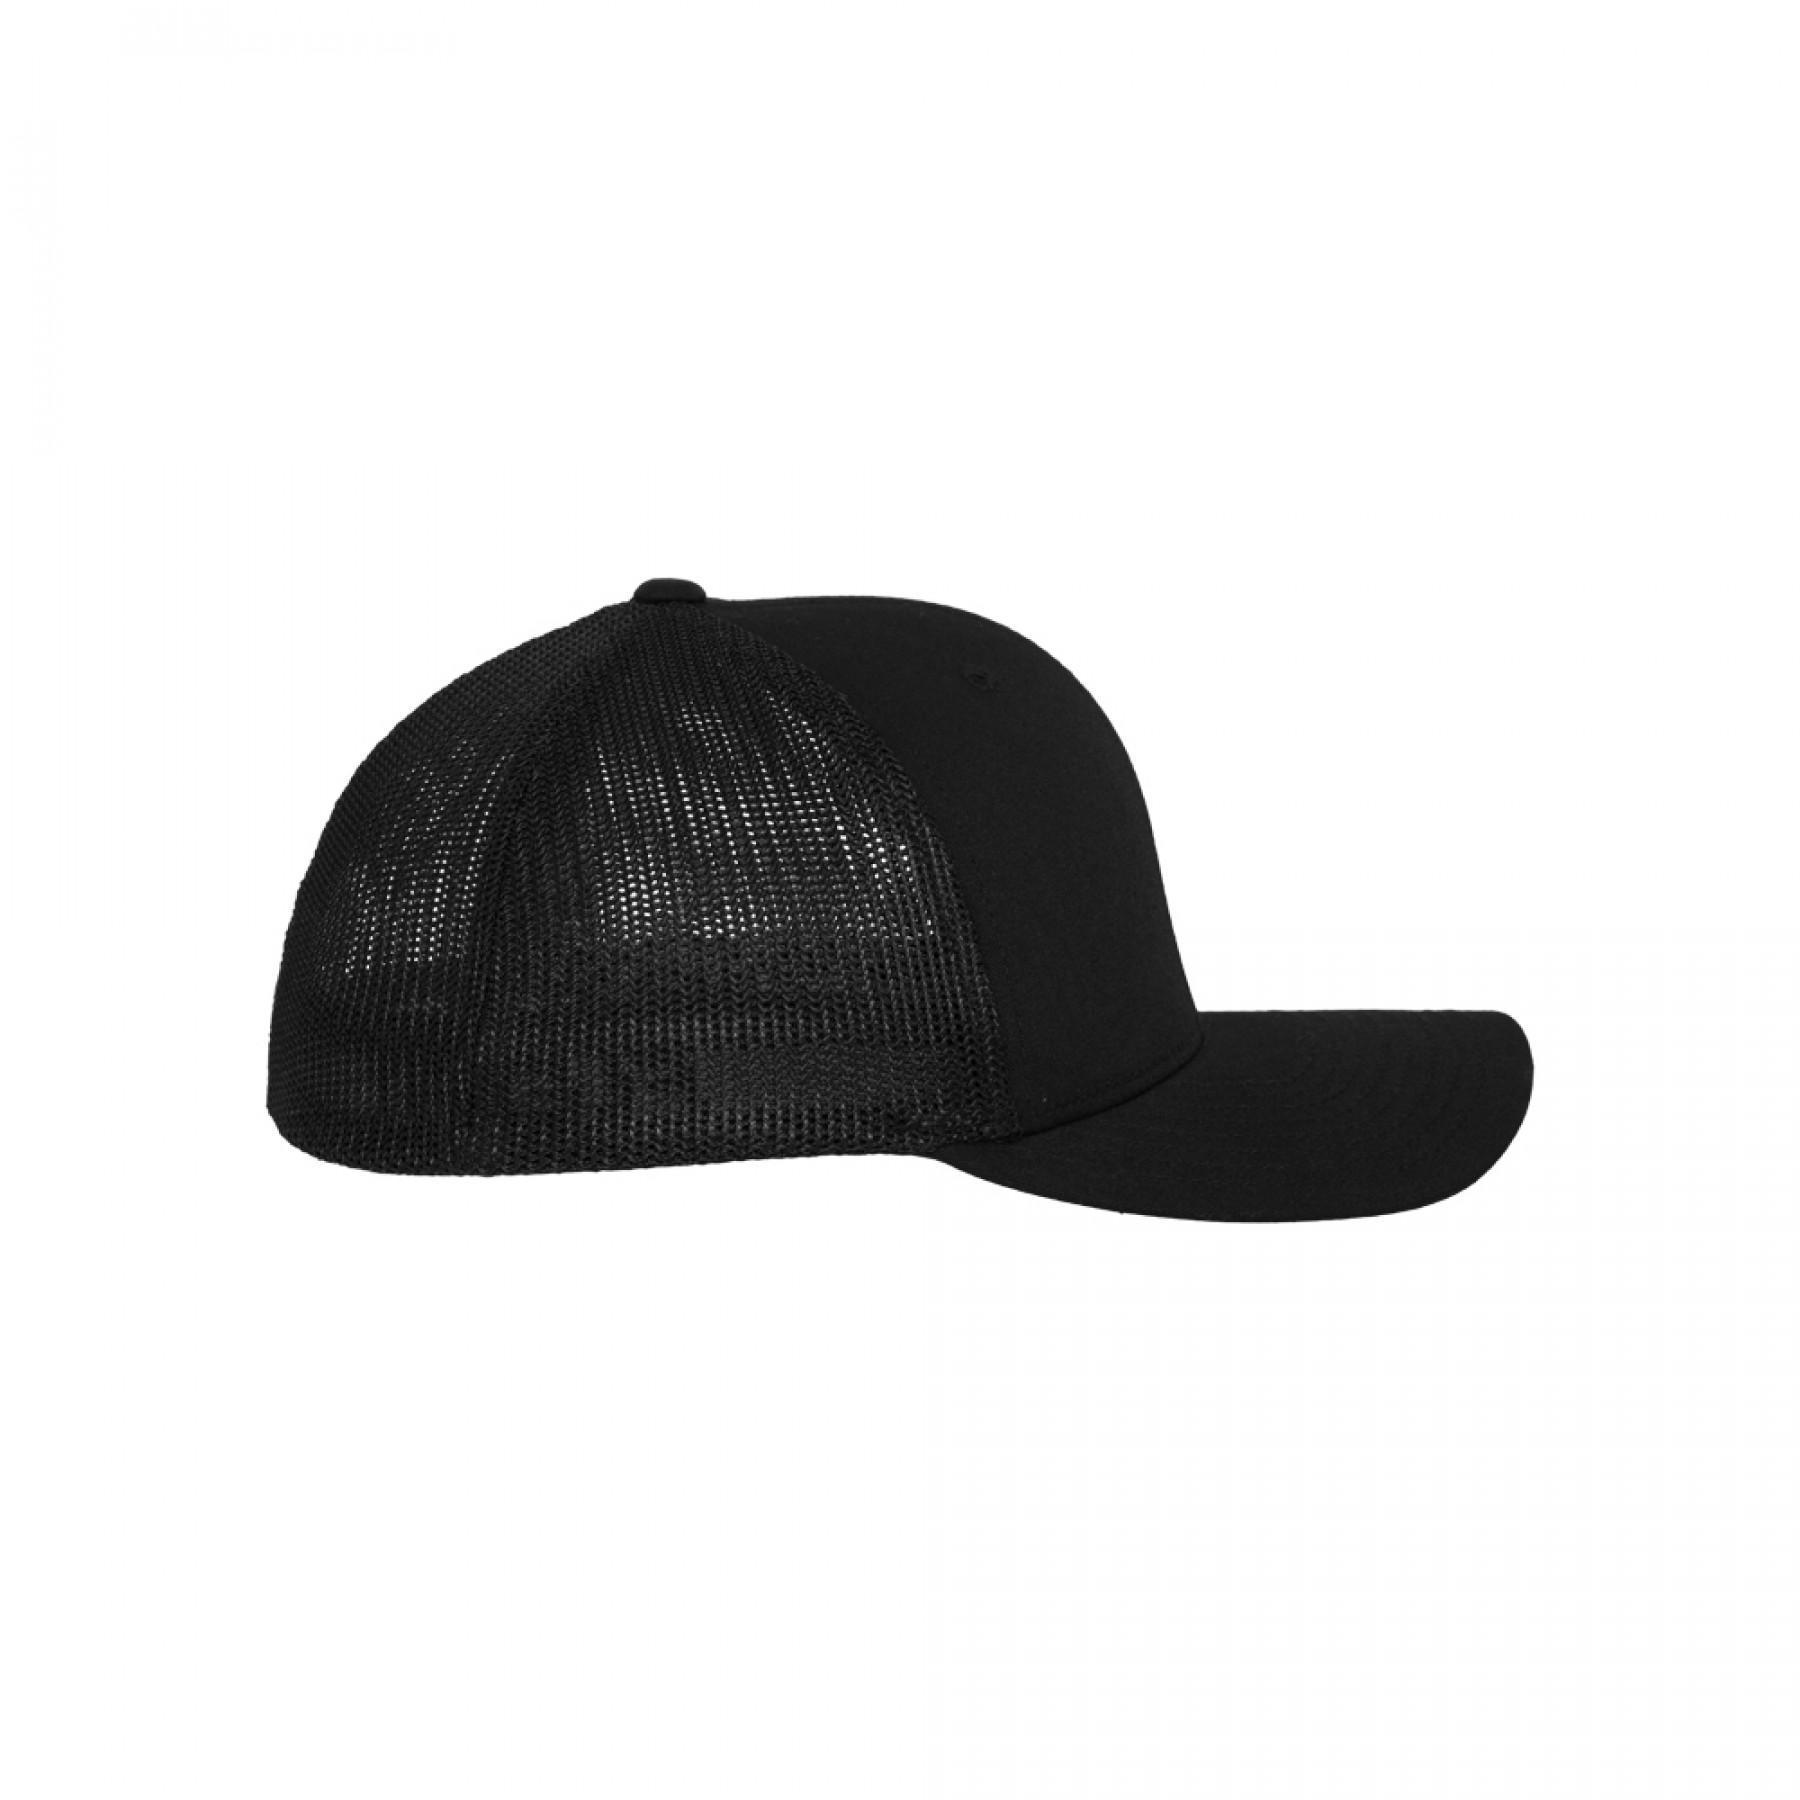 Trucker Hat Flexfit 